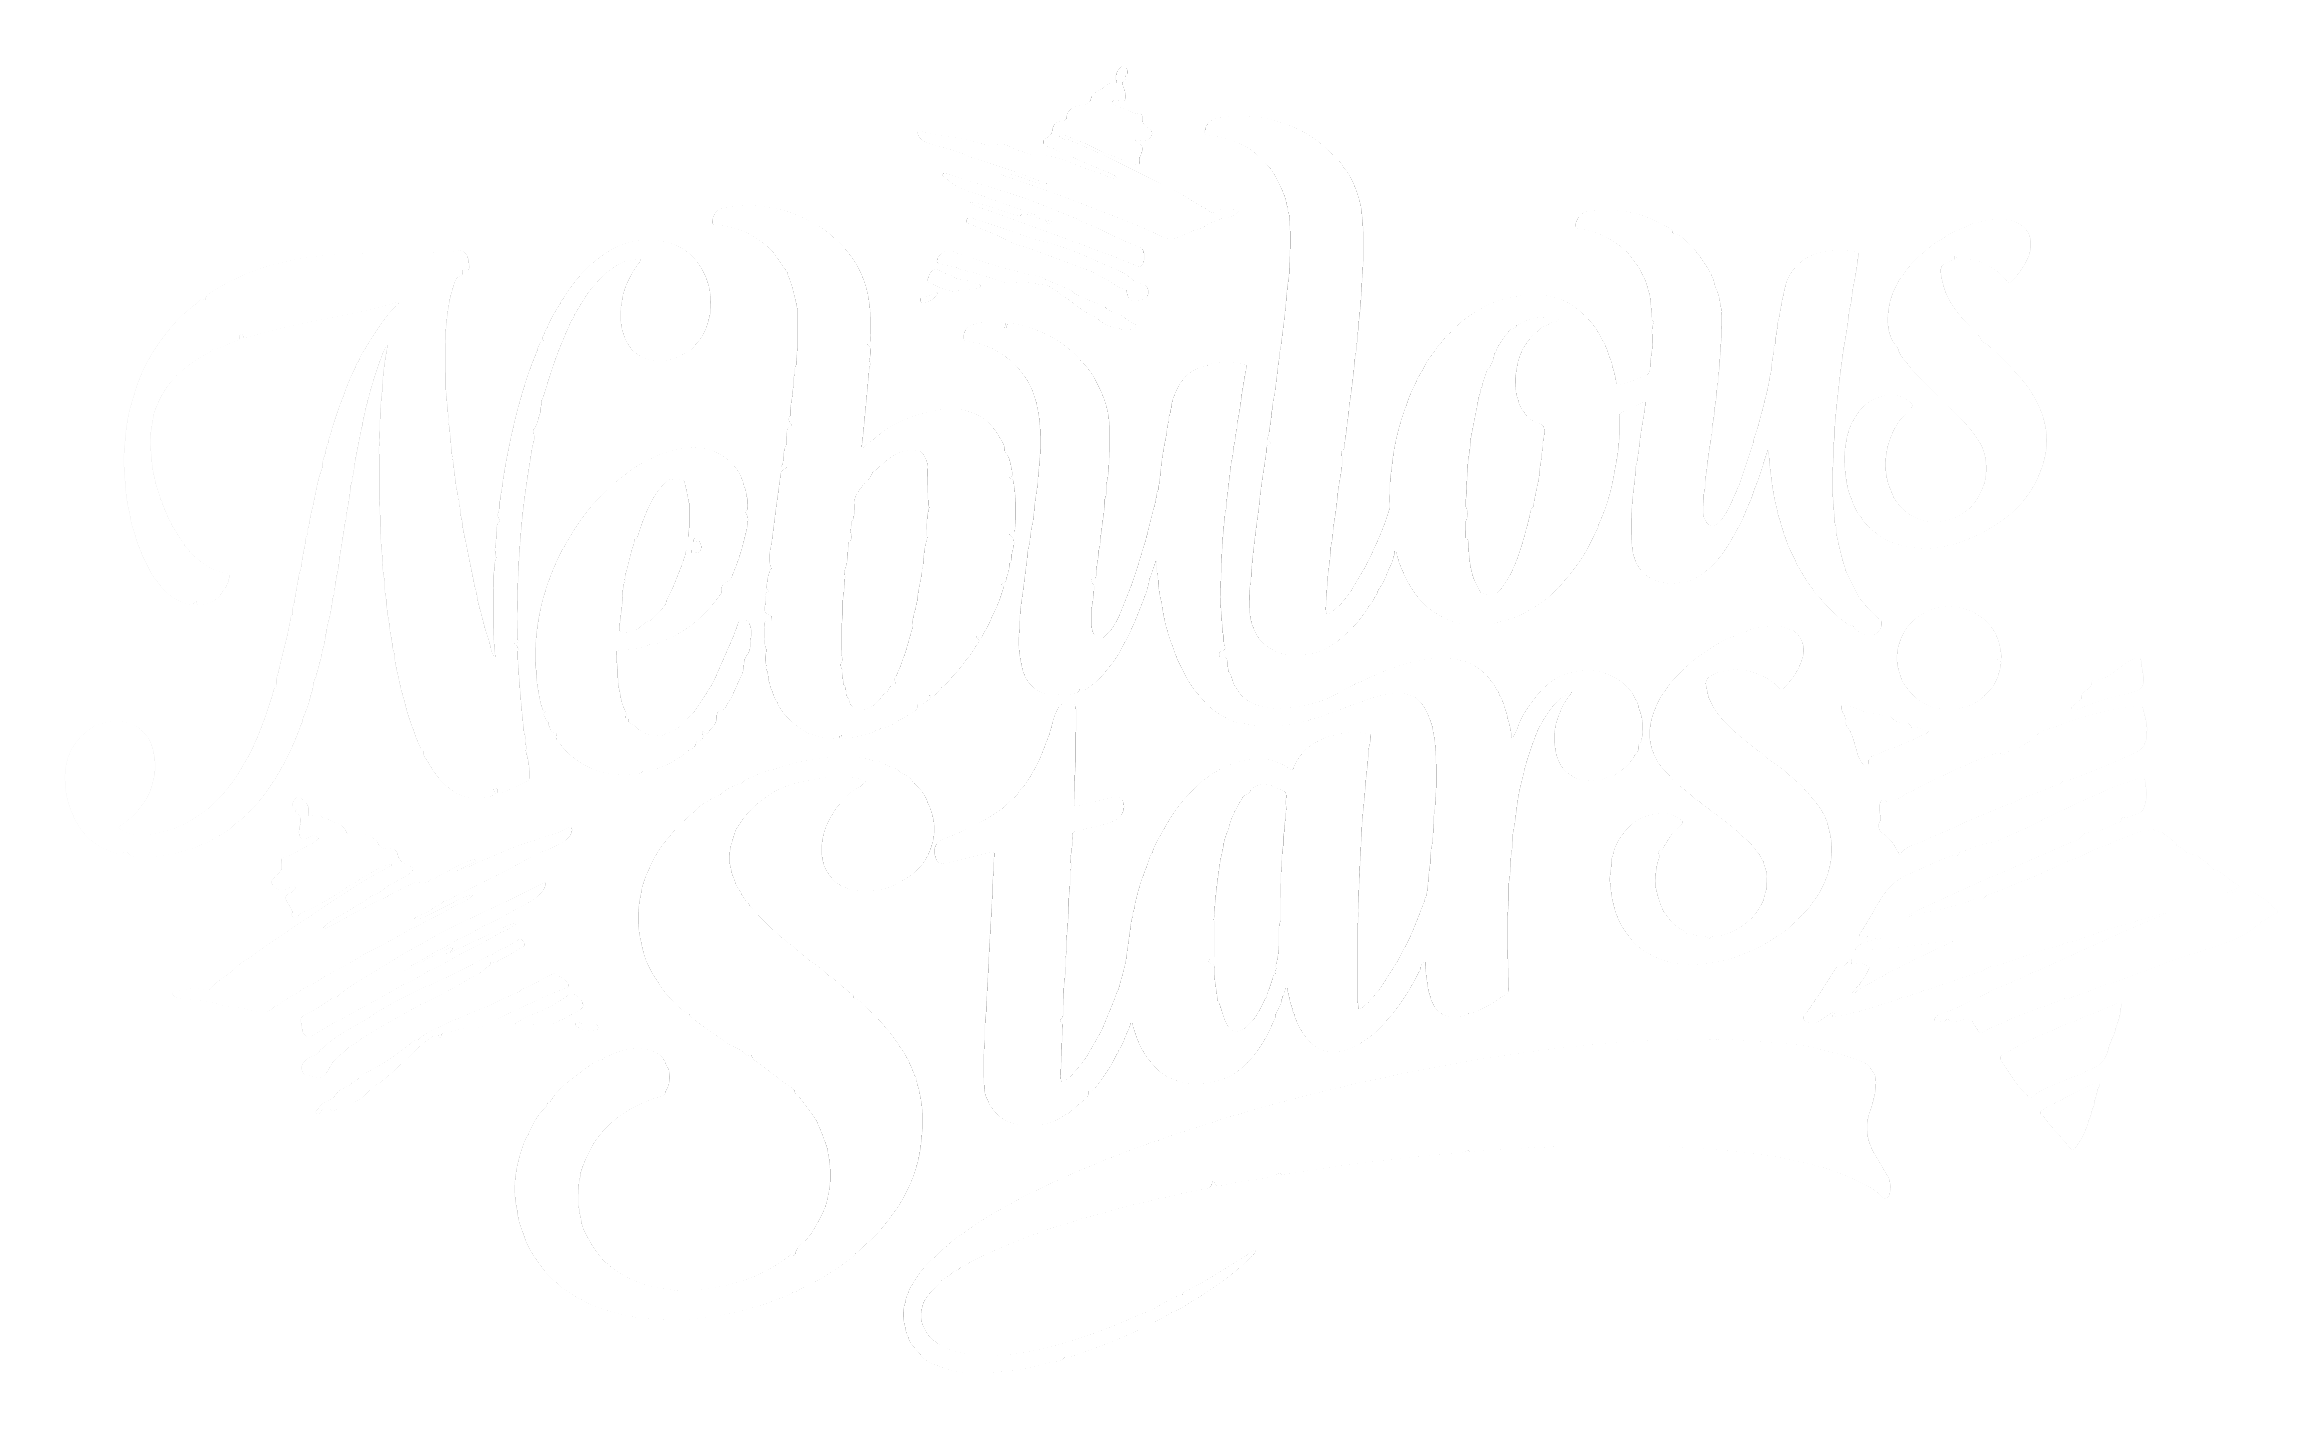 White-nebulous-stars